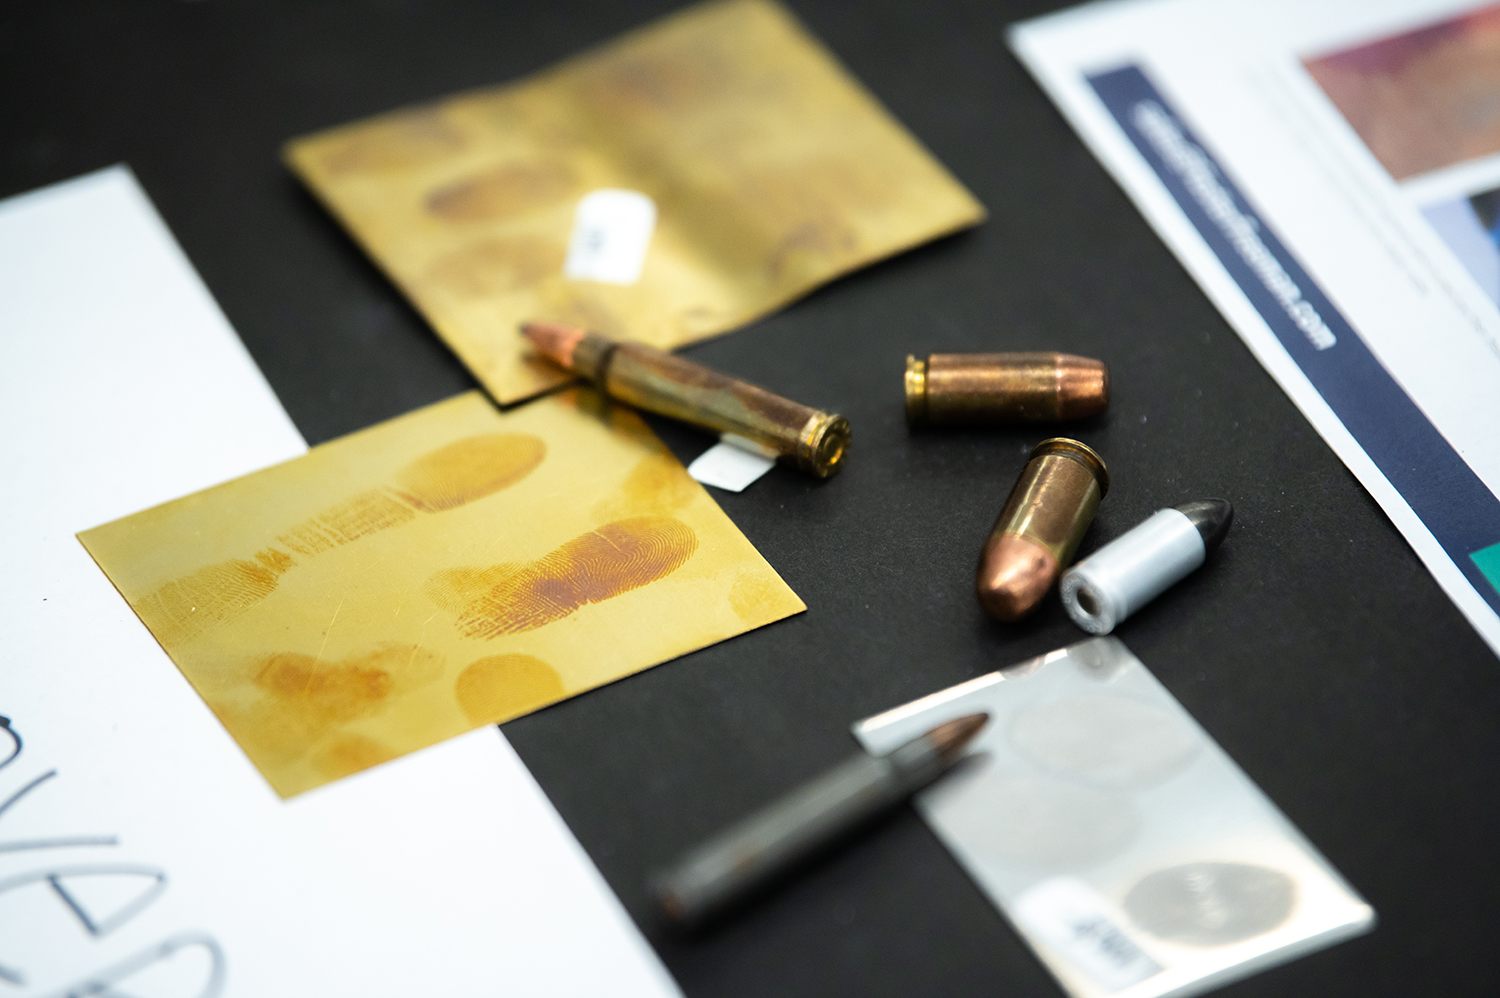 Bullets and finger print slides on table 